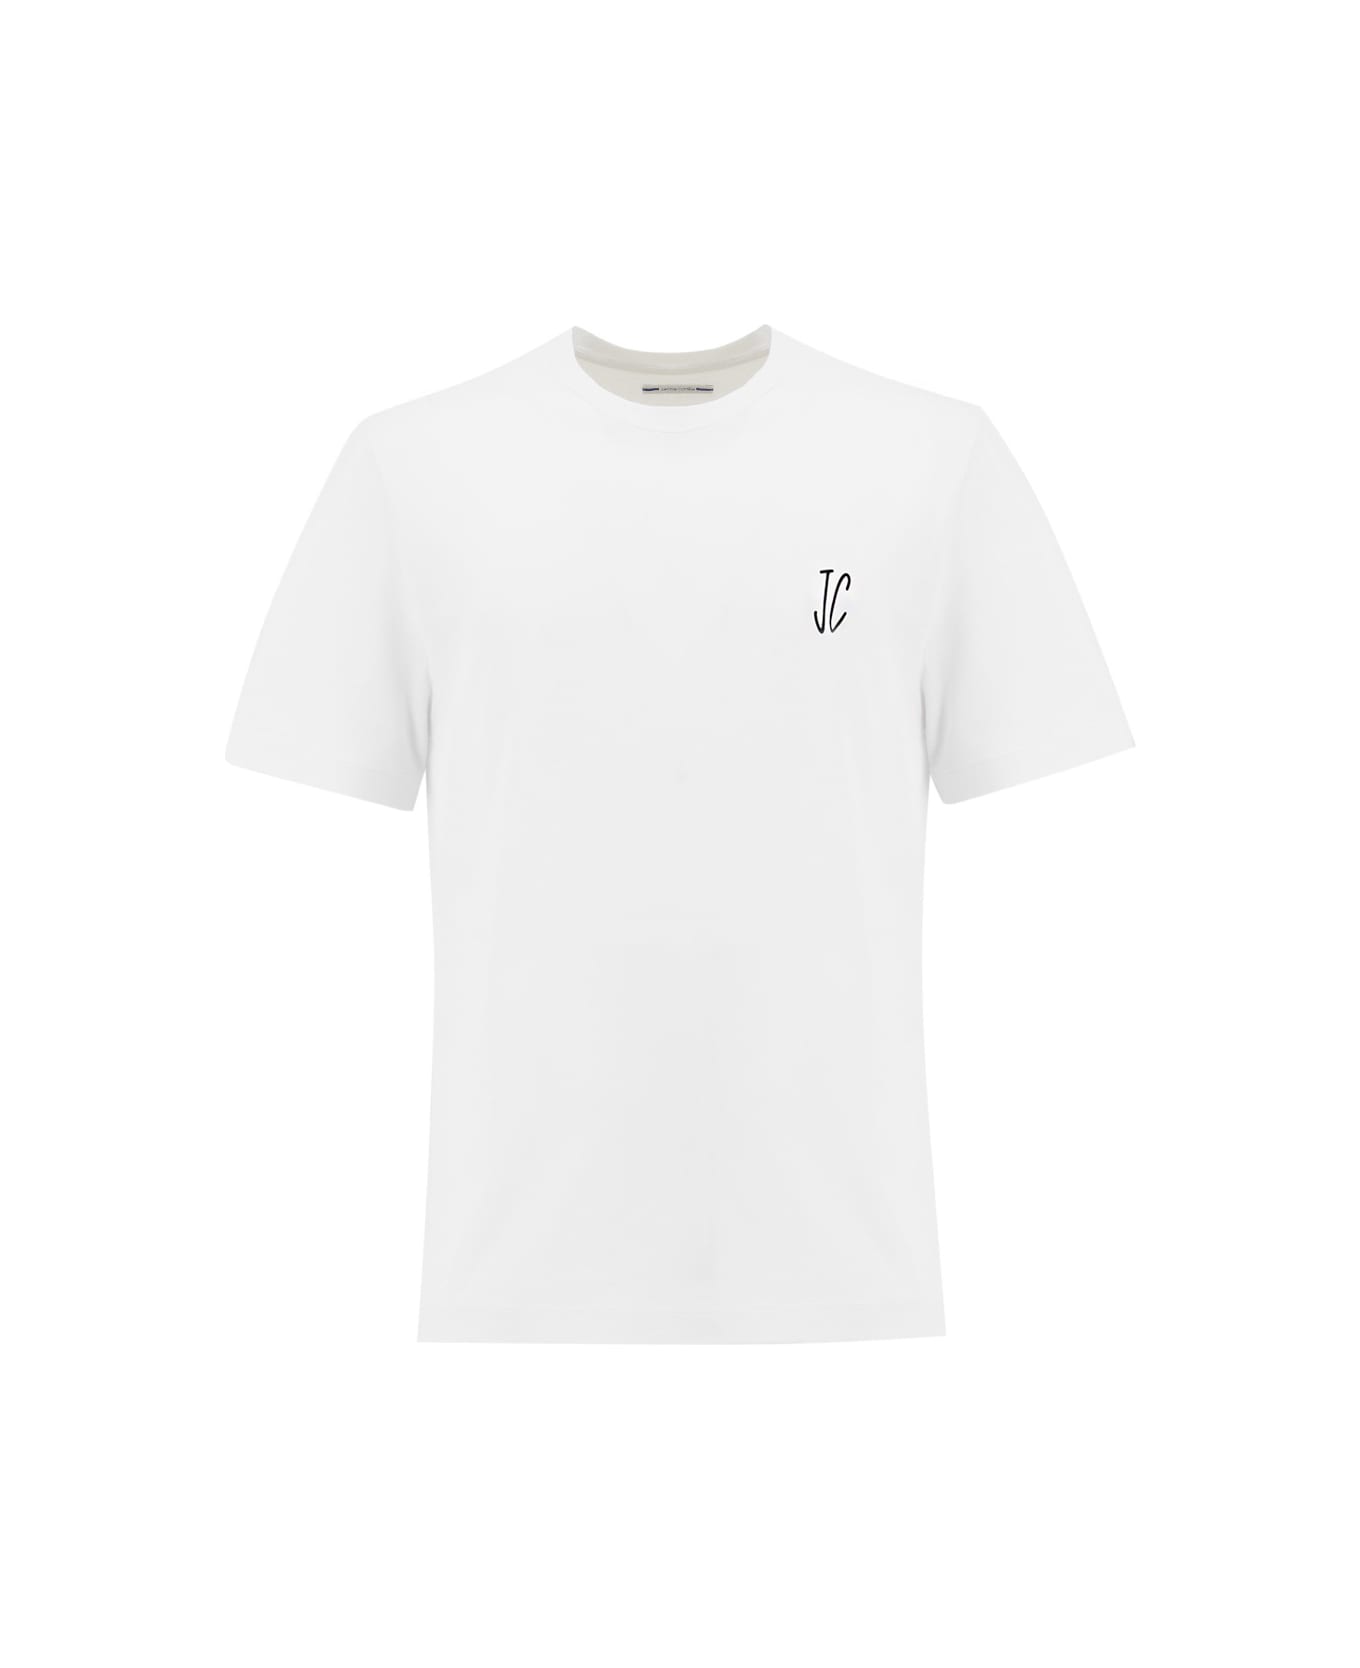 Jacob Cohen T-shirt - OPTICAL WHITE